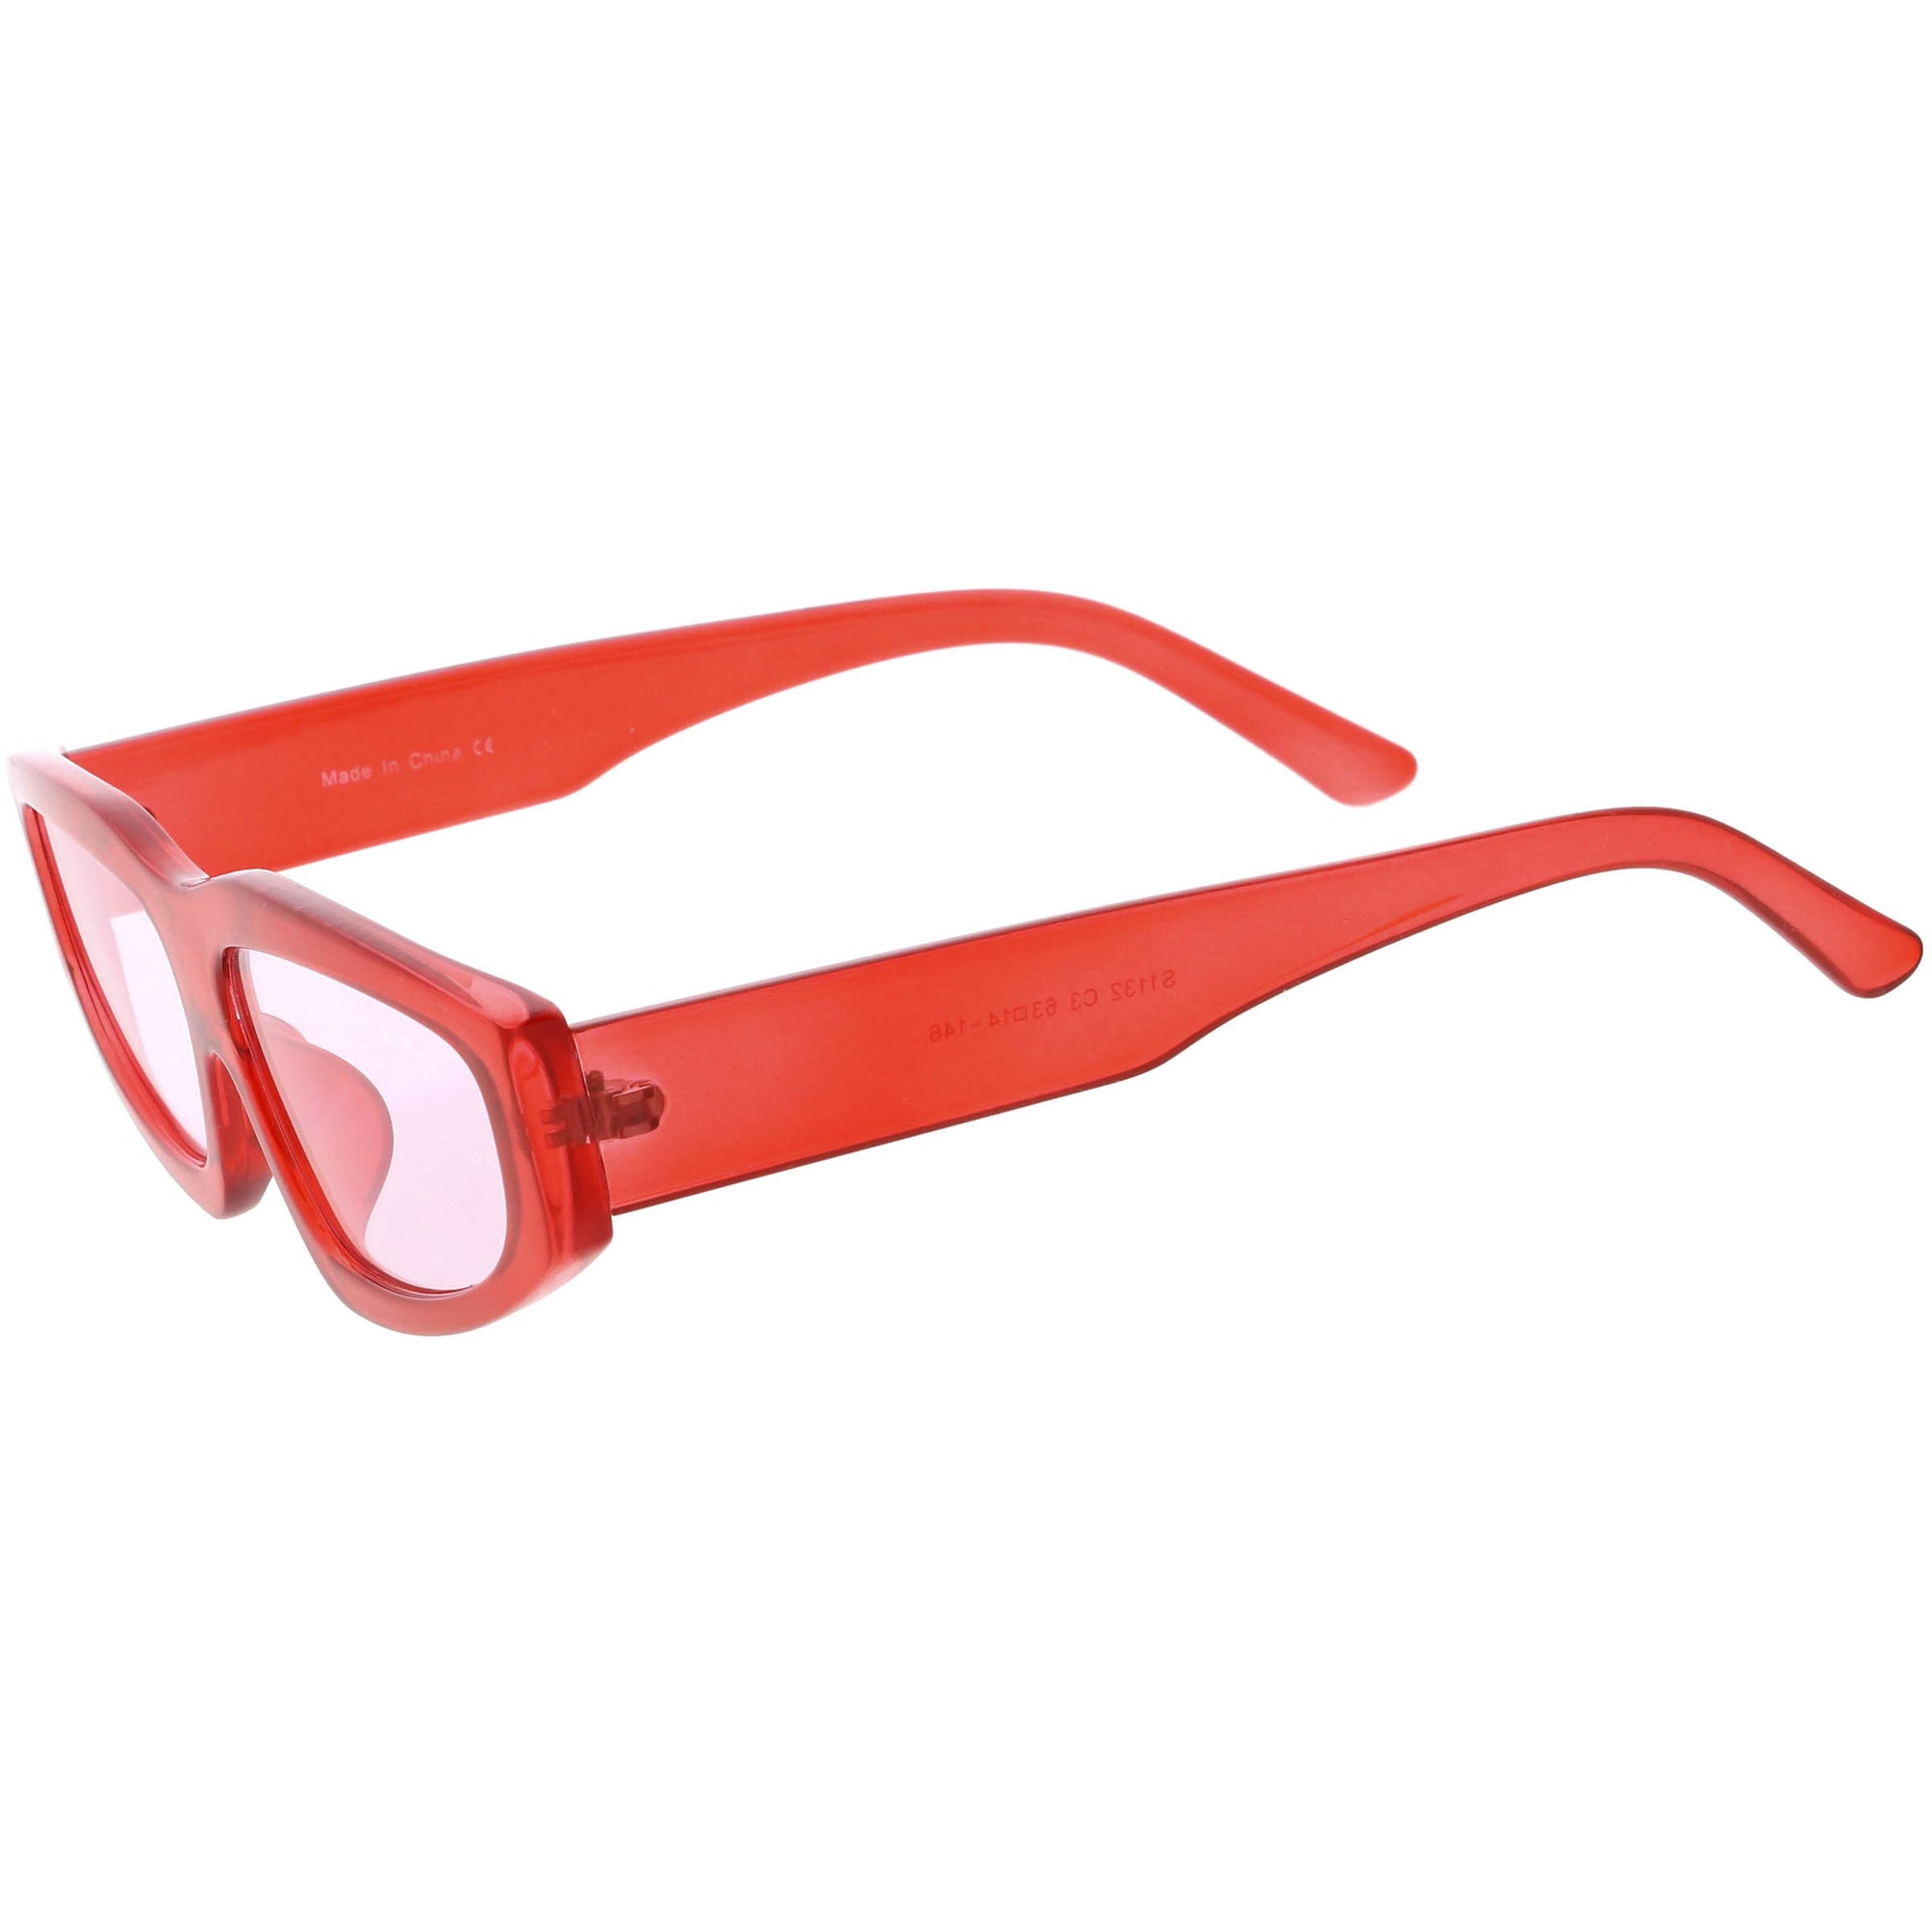 Chloé Women's Novelty Sunglasses